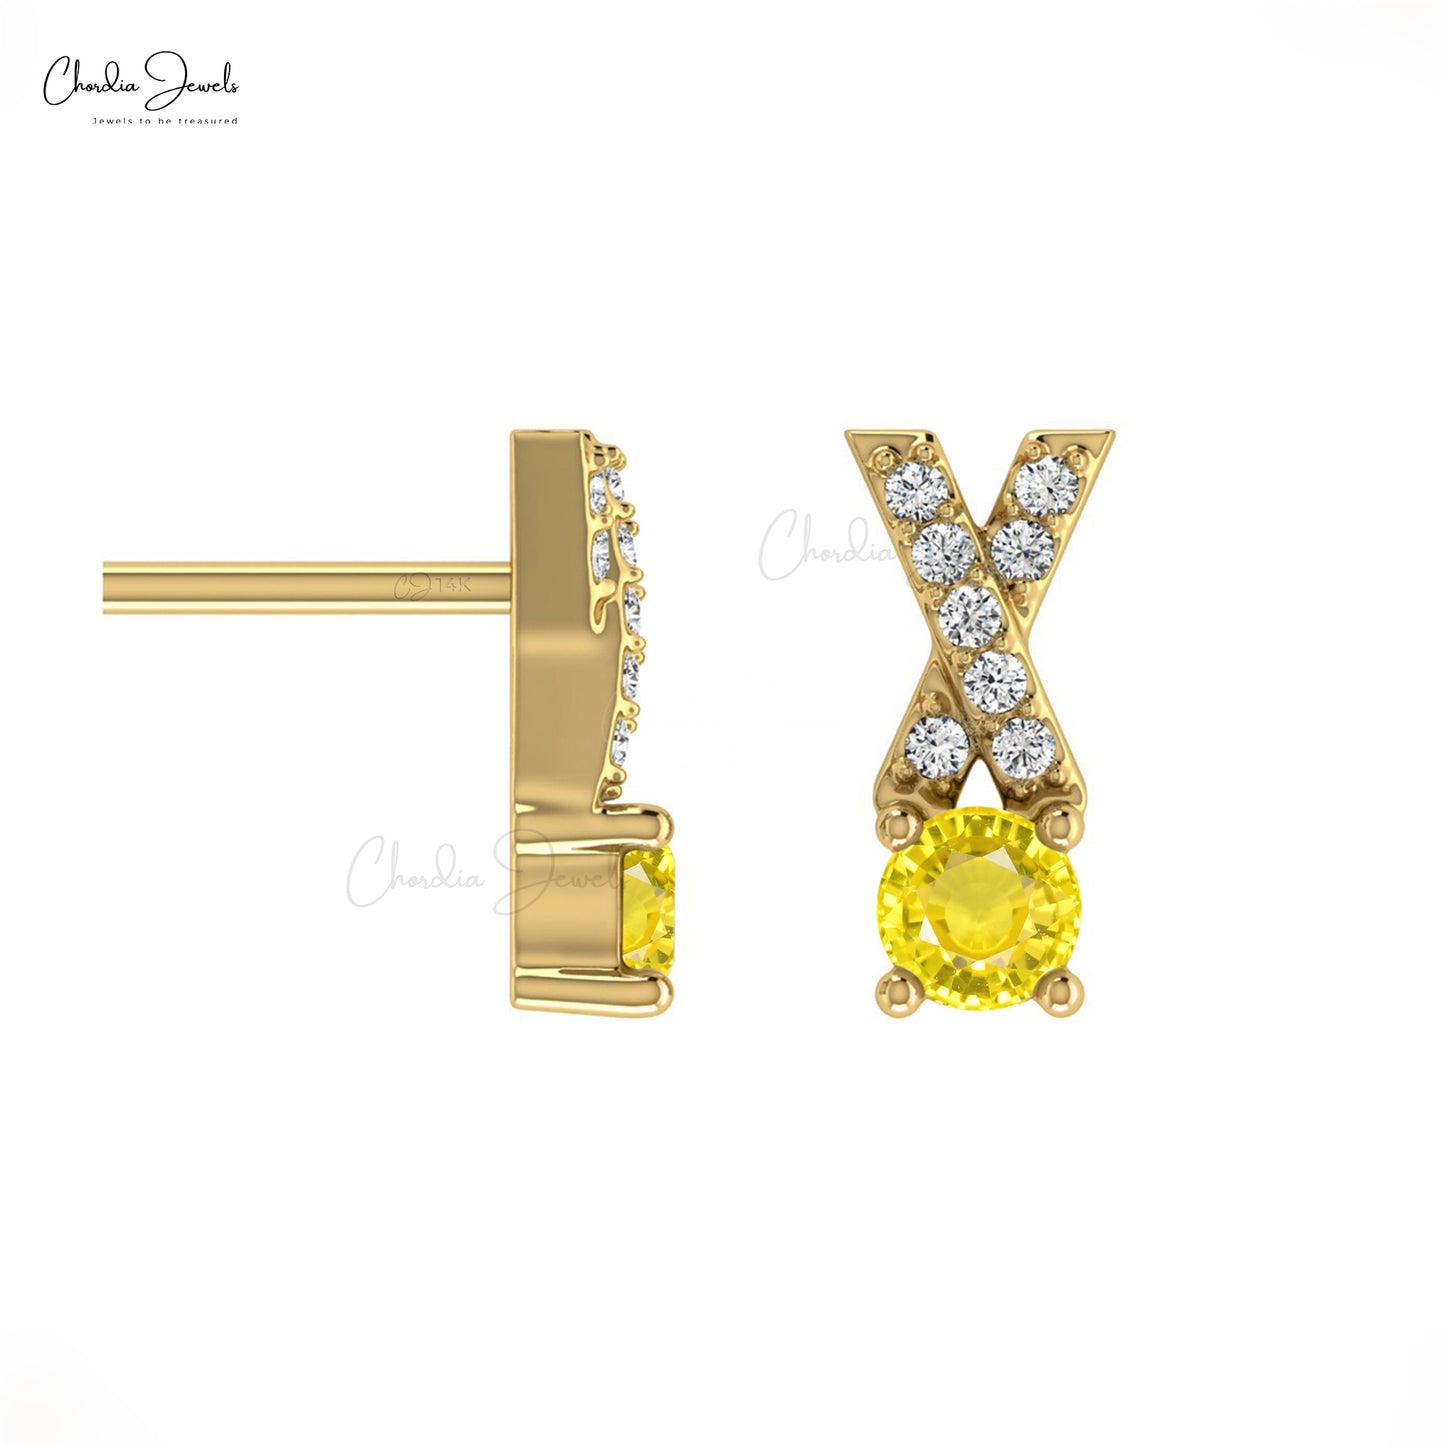 Natural Yellow Sapphire Criss Cross Handmade Studs Earring 14k Solid Gold White Diamond Earring 5mm Round Cut Gemstone Earring For Women's